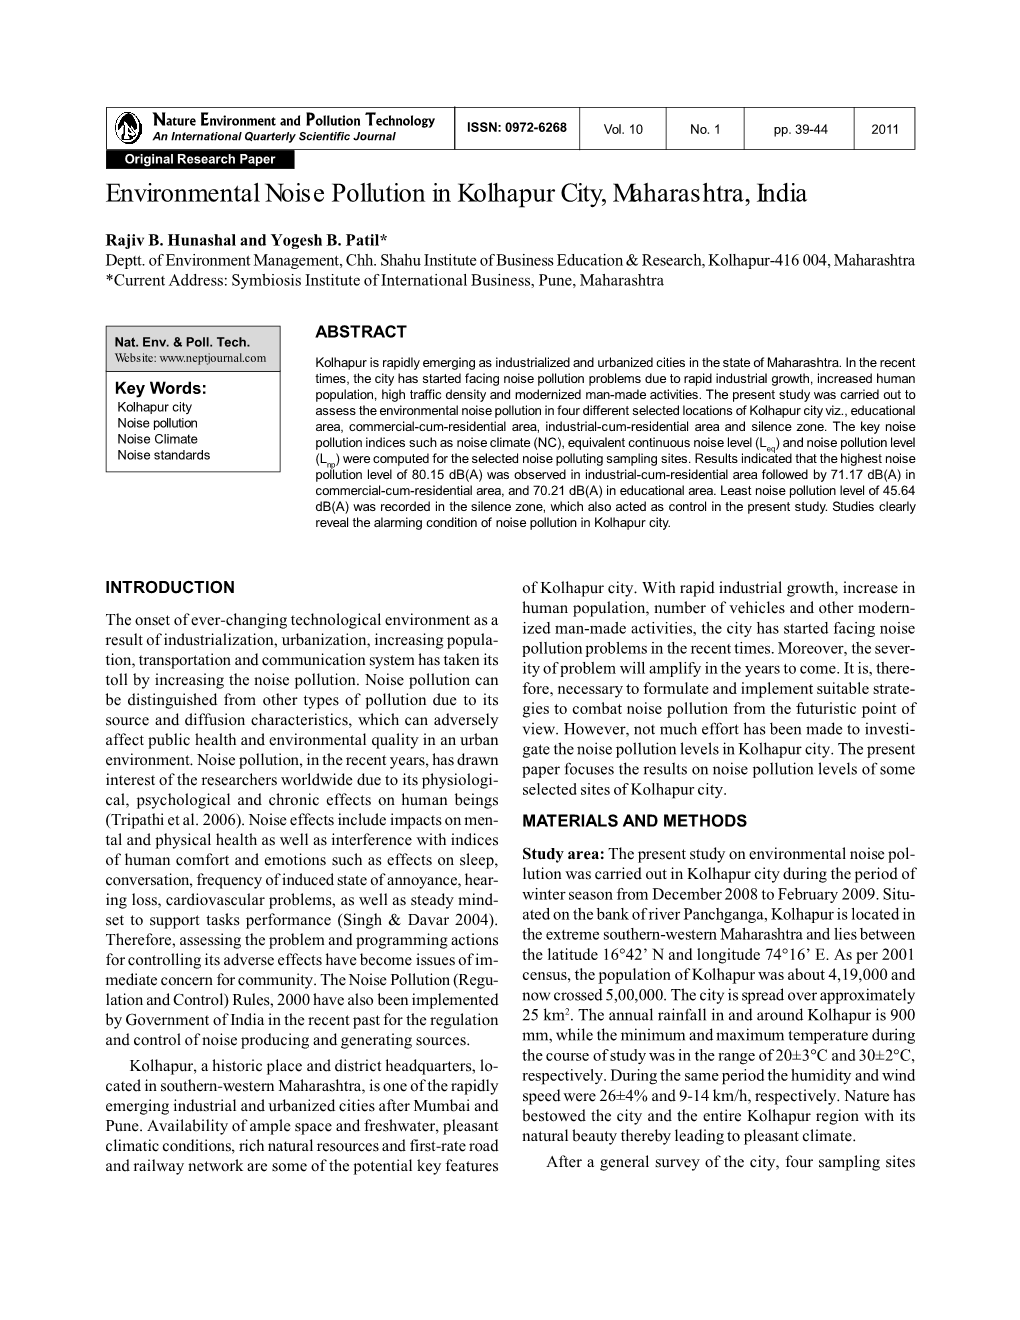 Environmental Noise Pollution in Kolhapur City, Maharashtra, India